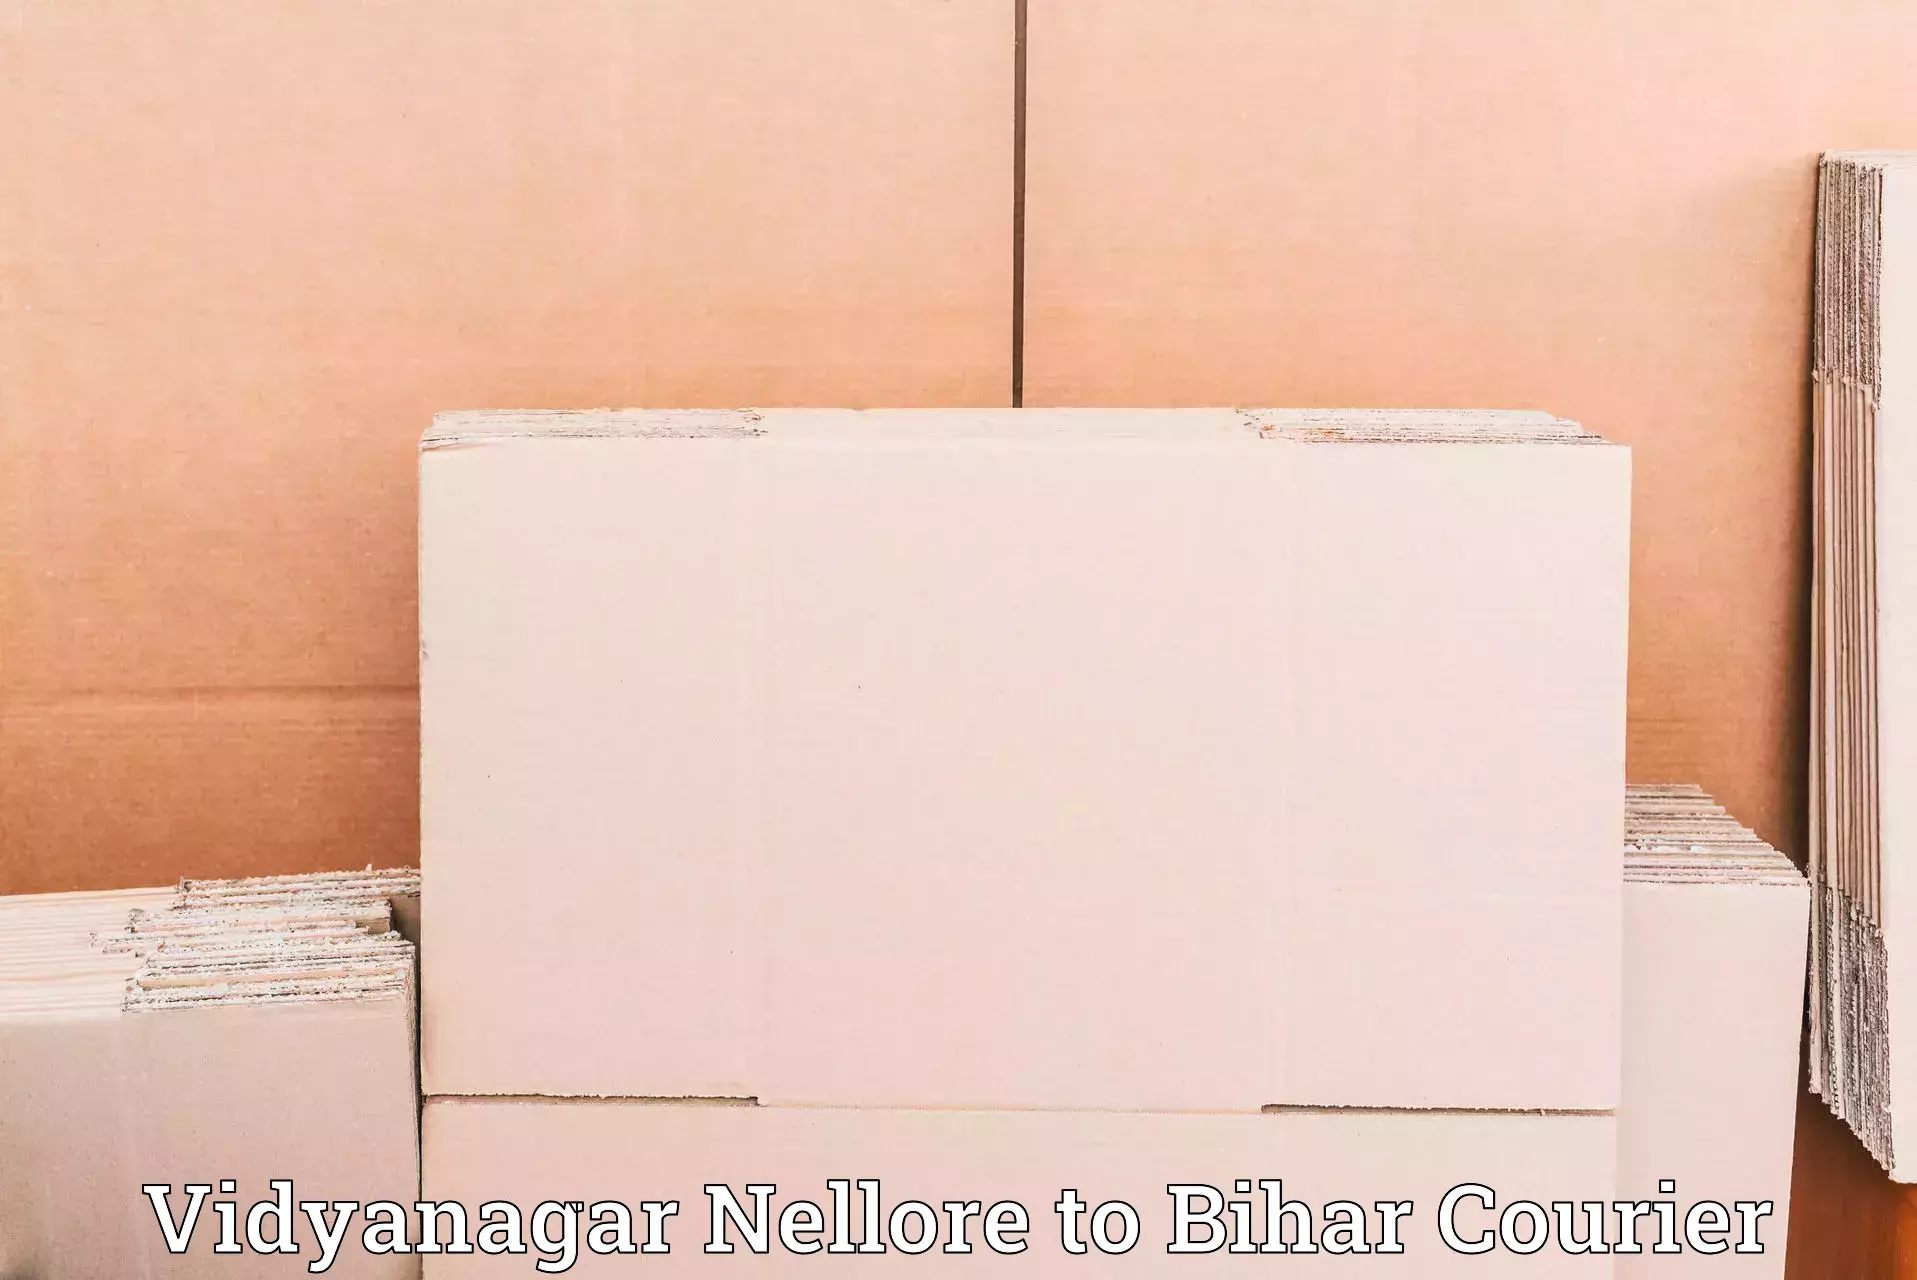 Cash on delivery service Vidyanagar Nellore to Bihar